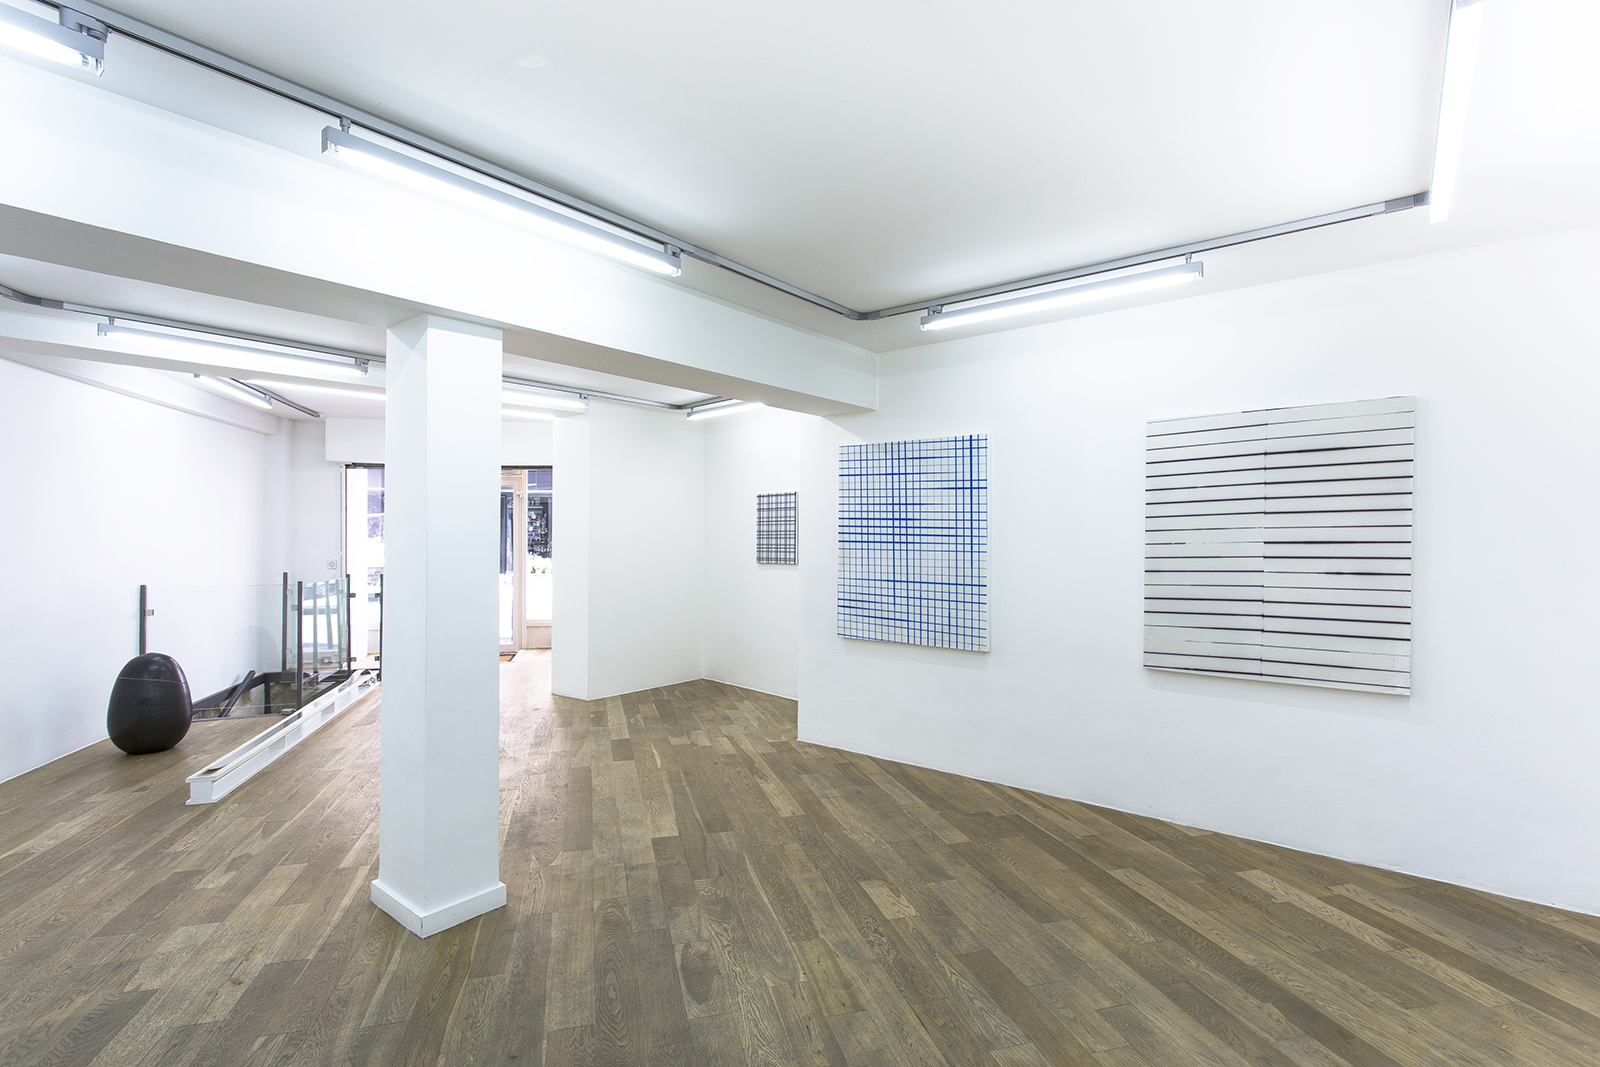 Tendency to movement, Thomas Baumann, exhibition view, June 2015